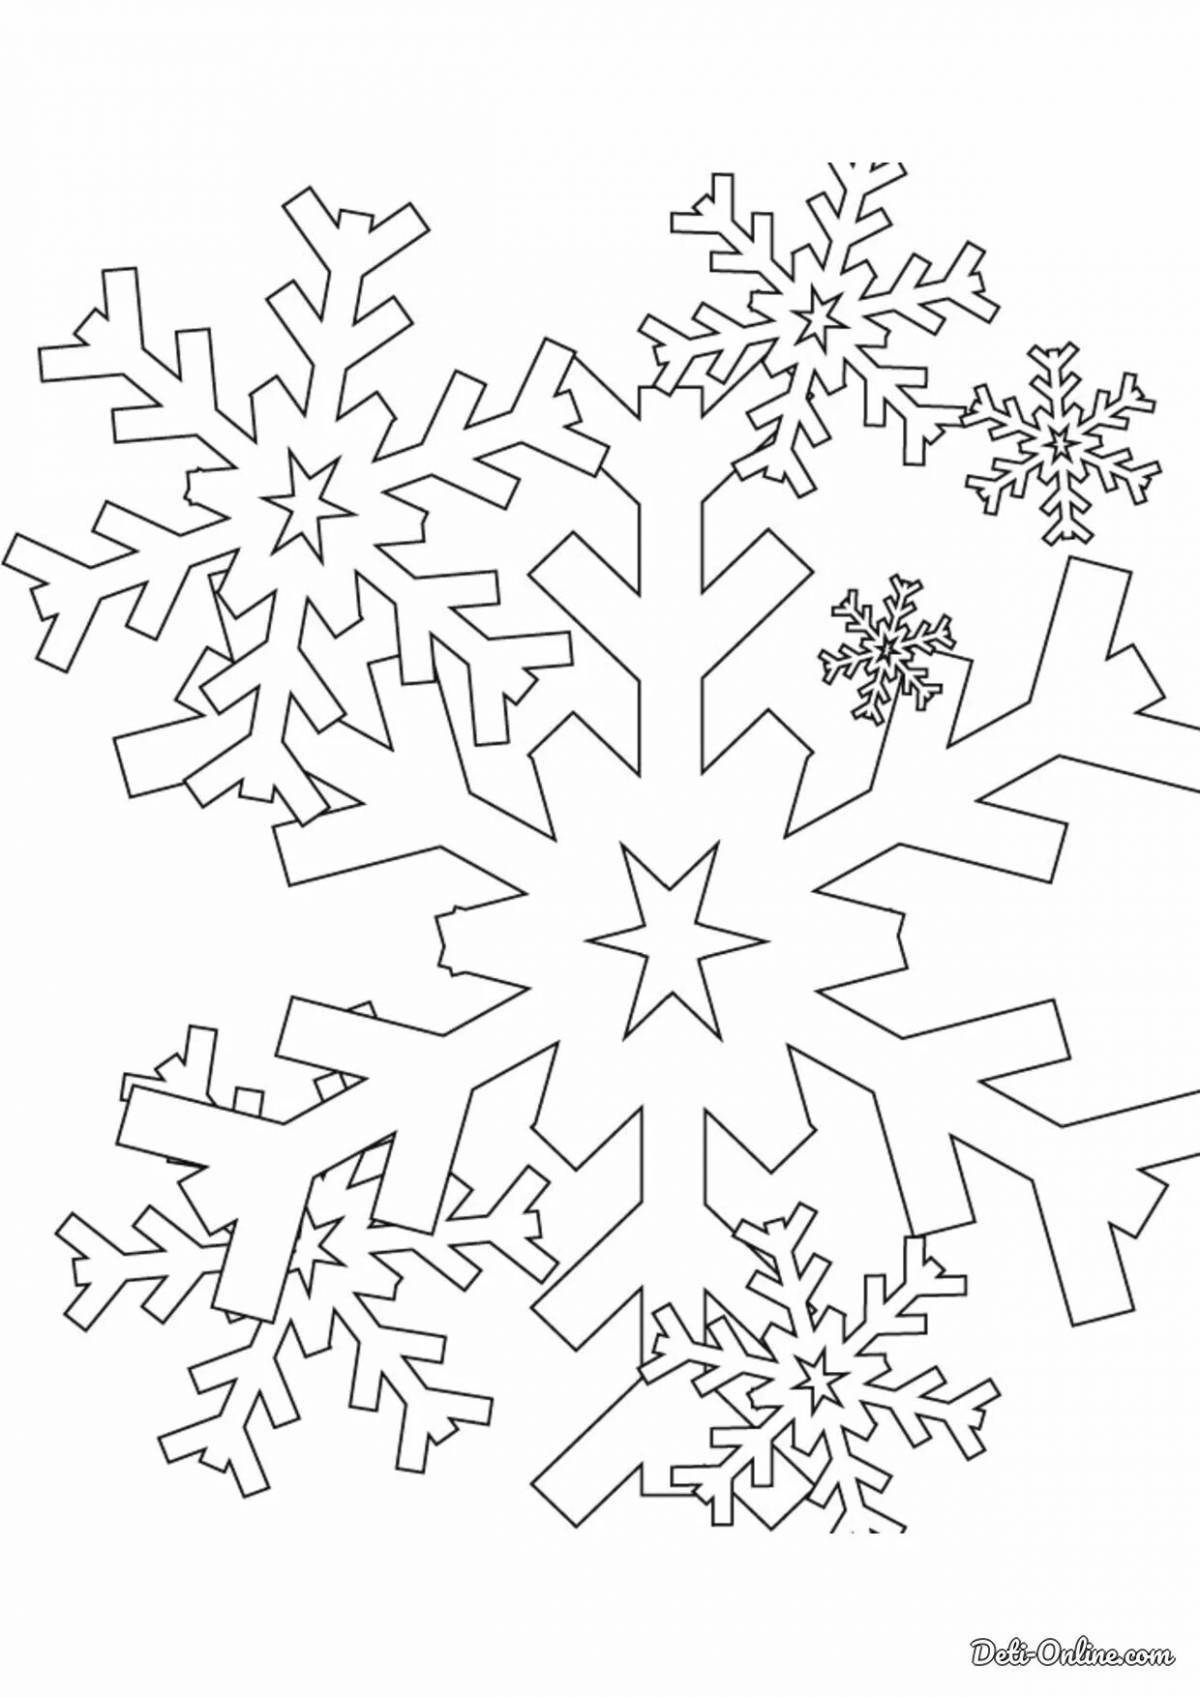 Incredible Christmas snowflake coloring book